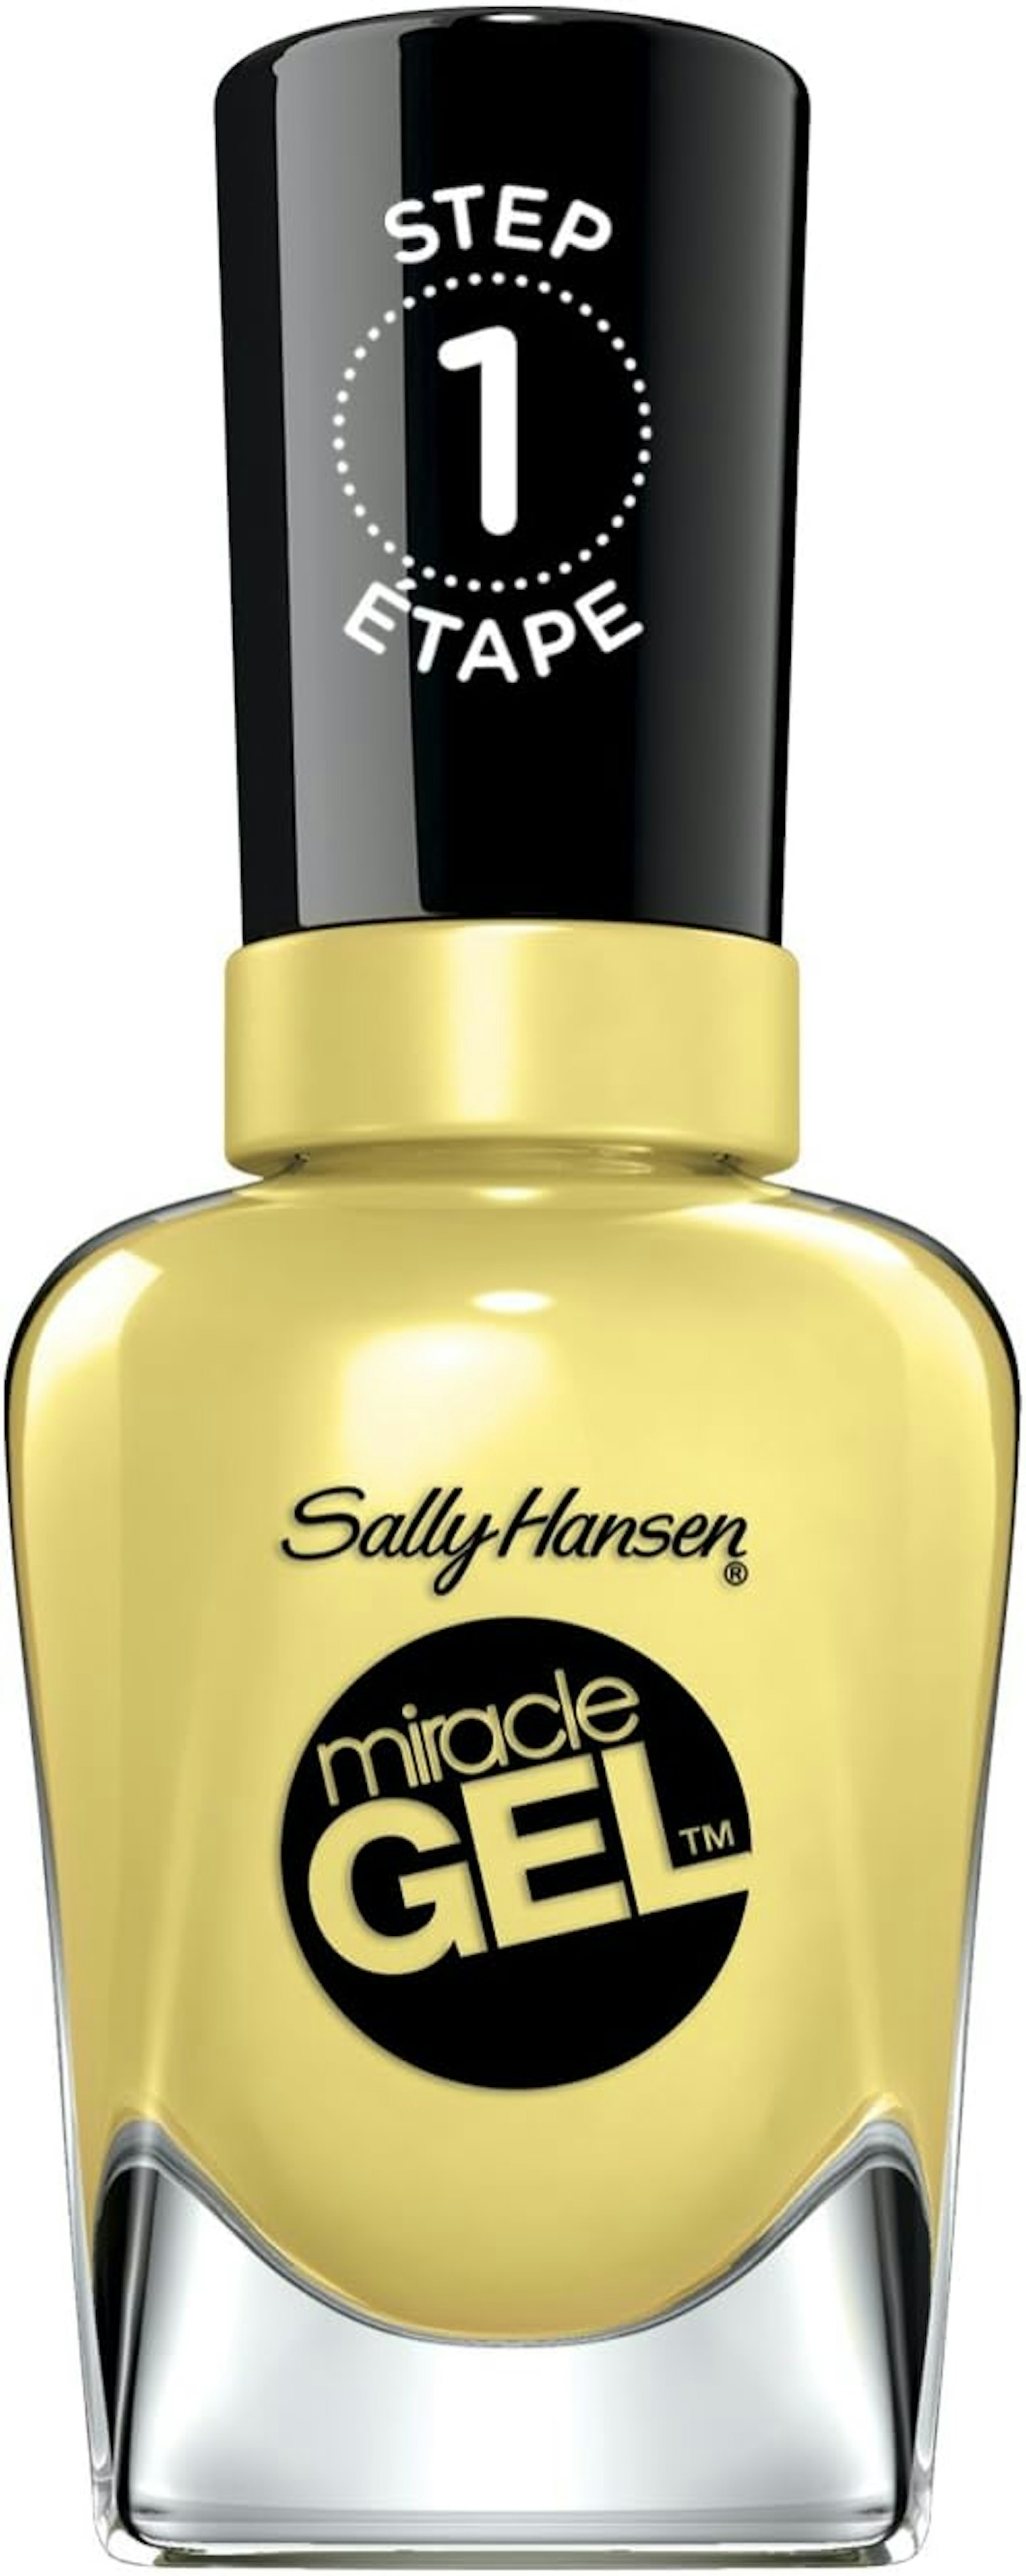 Sally Hansen Miracle Gel Nail Polish in 390 Lemon Heaven